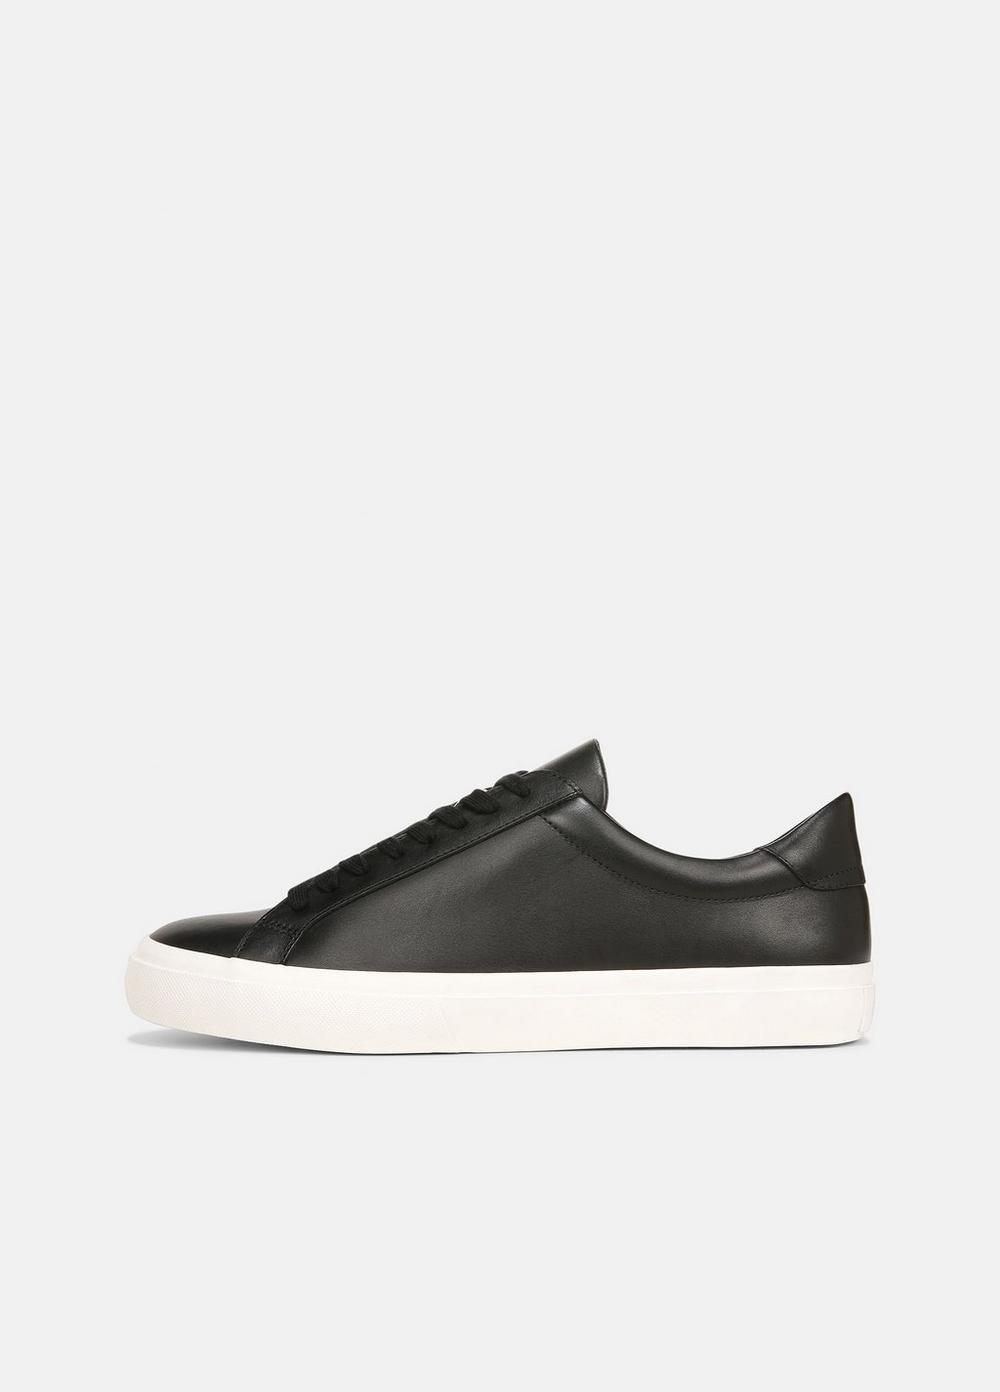 Fulton Leather Sneaker, Black, Size 9.5 Vince